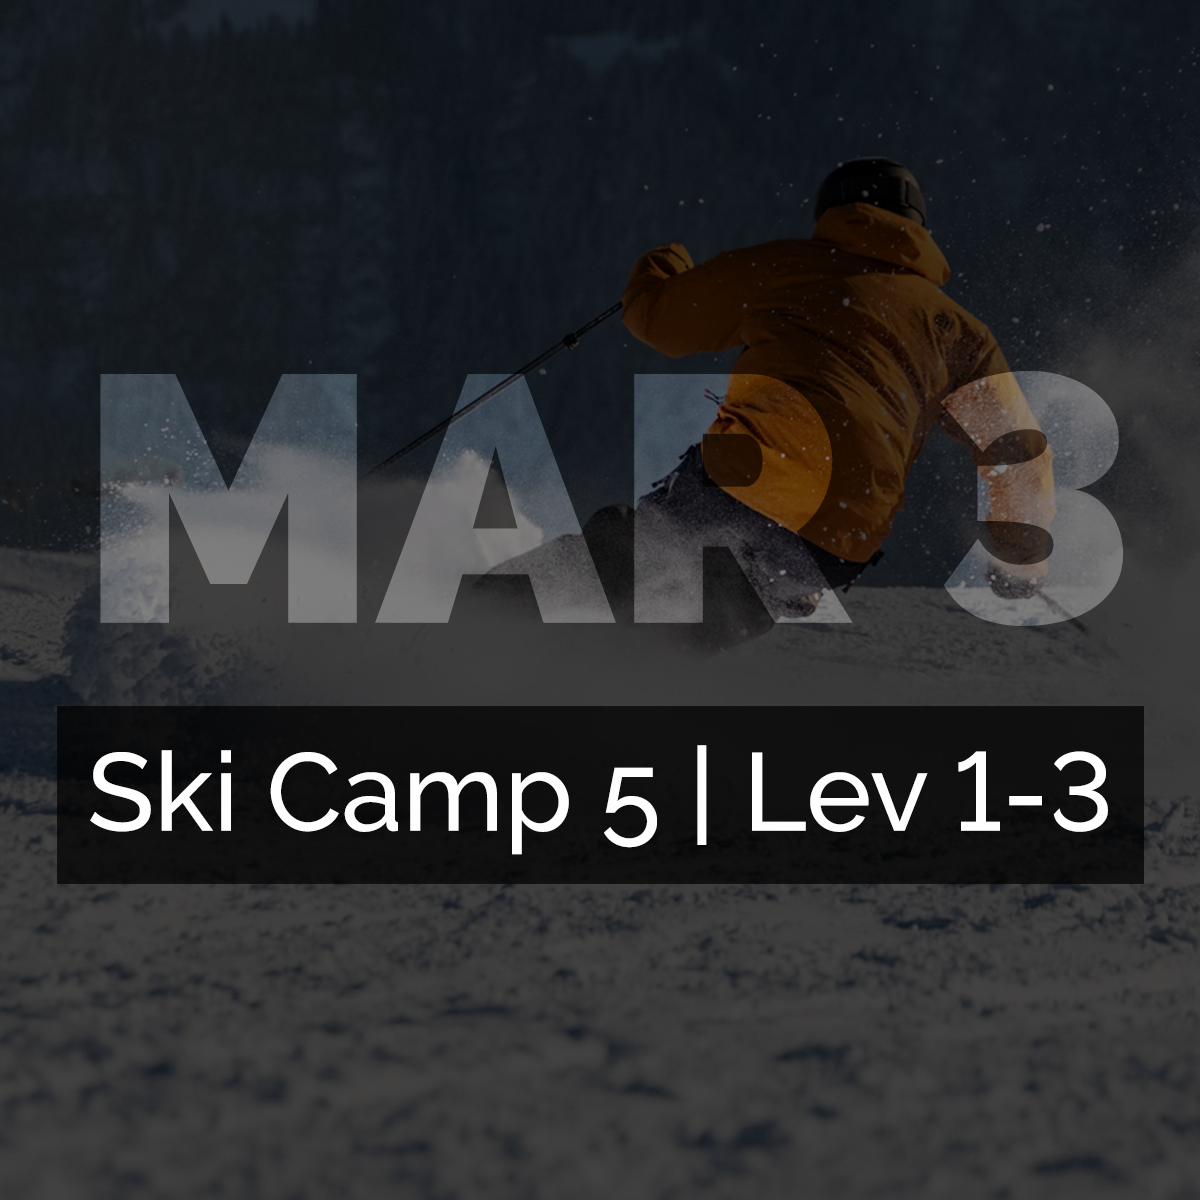 Laax Ski Camp 5 | Mar 3-9 |